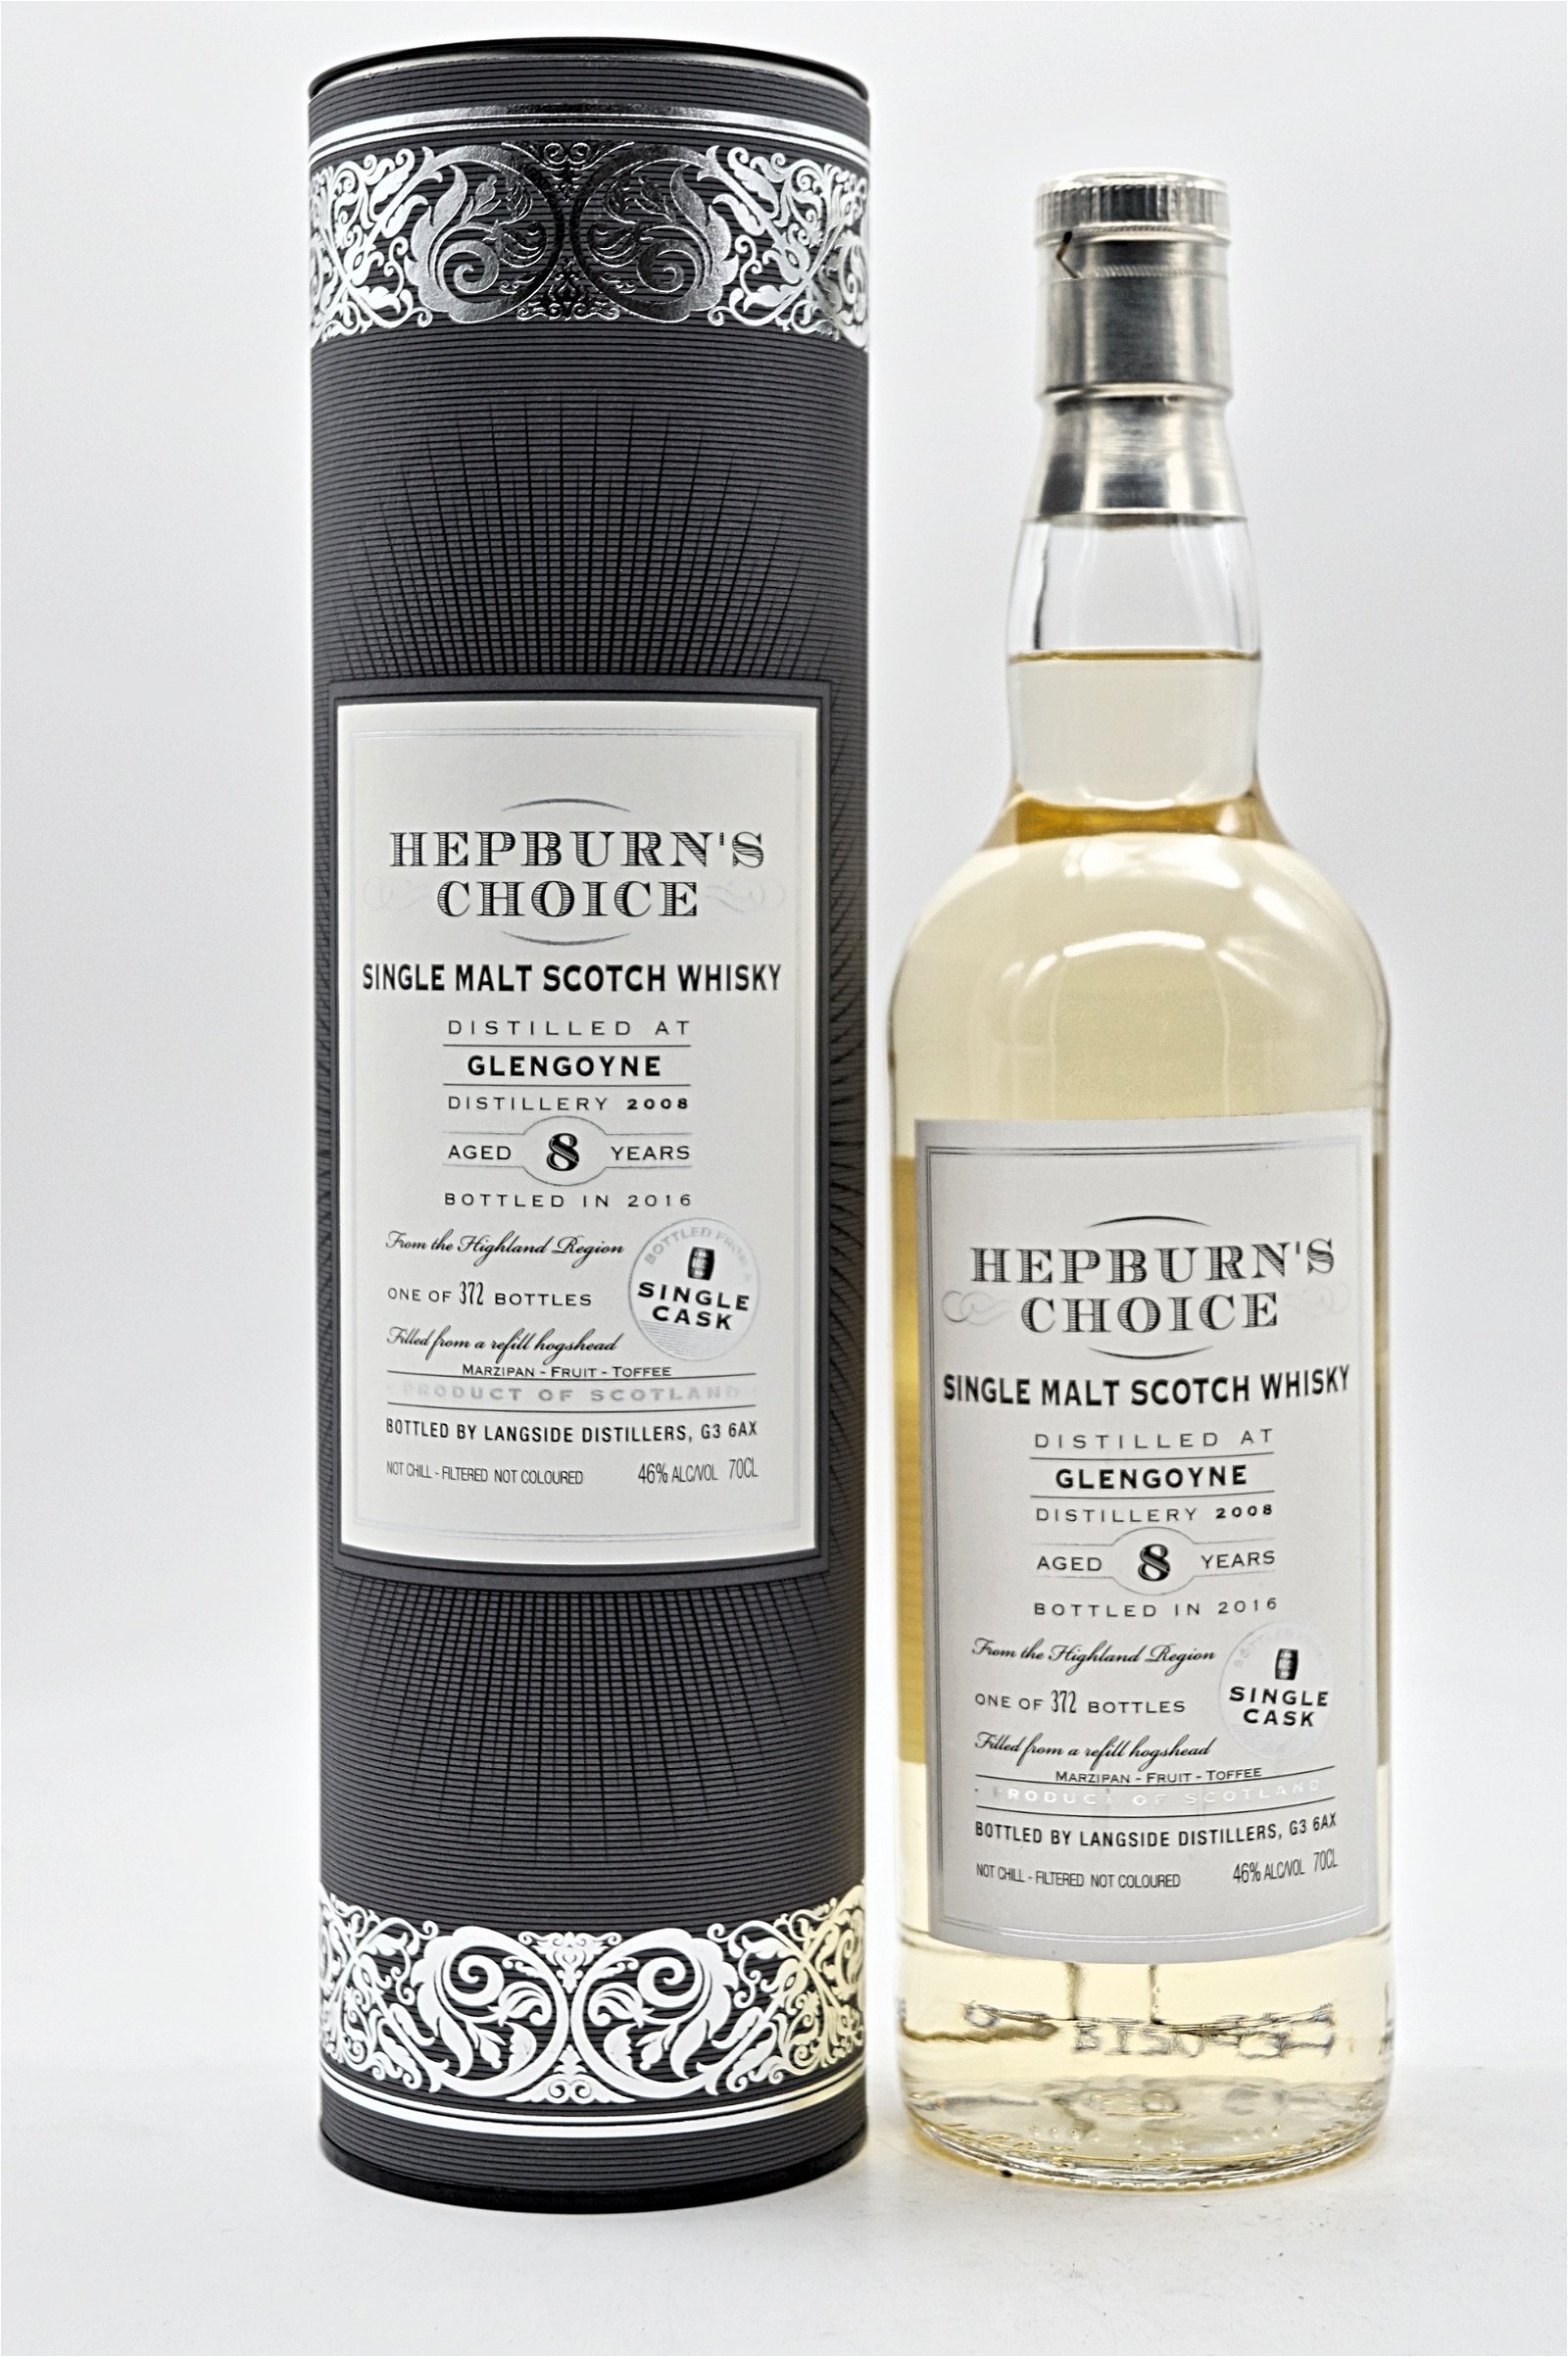 Hepburns Choice Glengoyne 8 Jahre 2008/2016 - 372 Fl. Single Malt Scotch Whisky